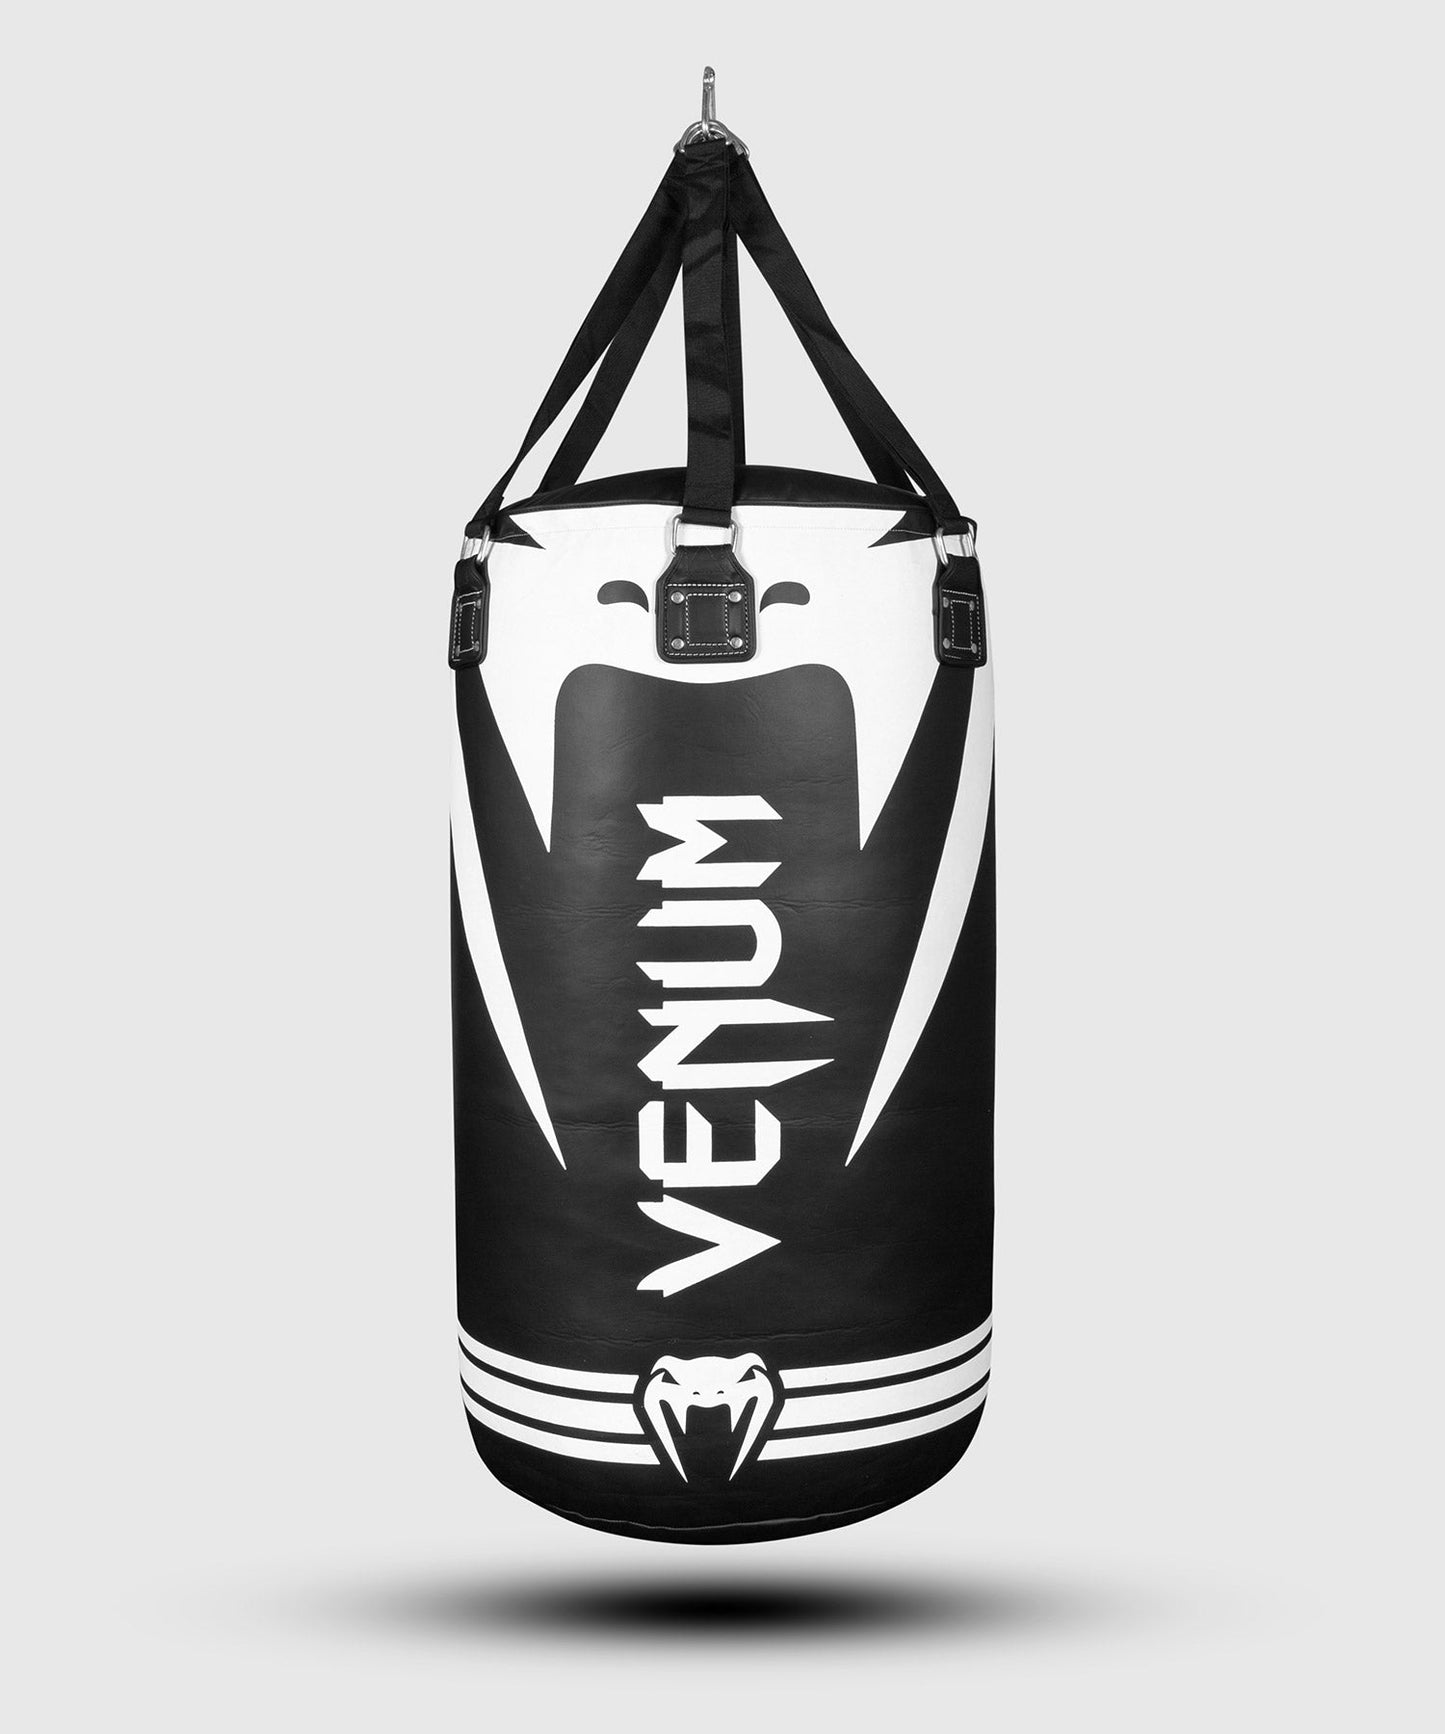 Venum Hurricane Heavy Punch Bag - Black/White